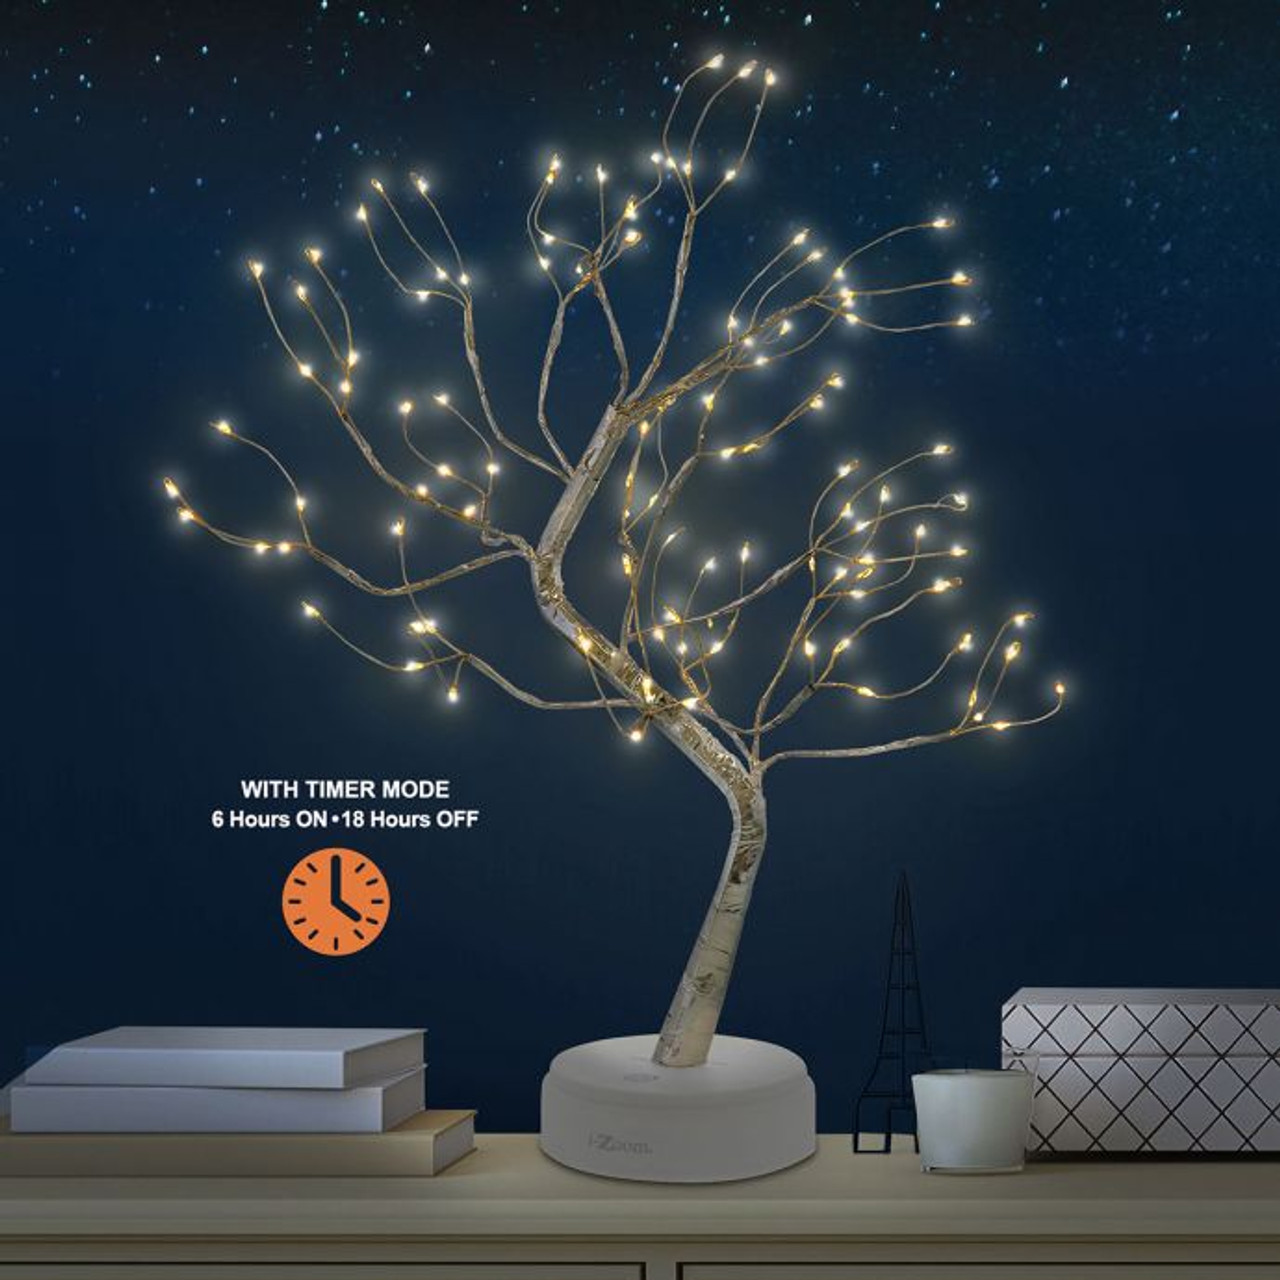 GLOW TREE FLEXIBLE LED ILLUMINATED DECOR LIGHT